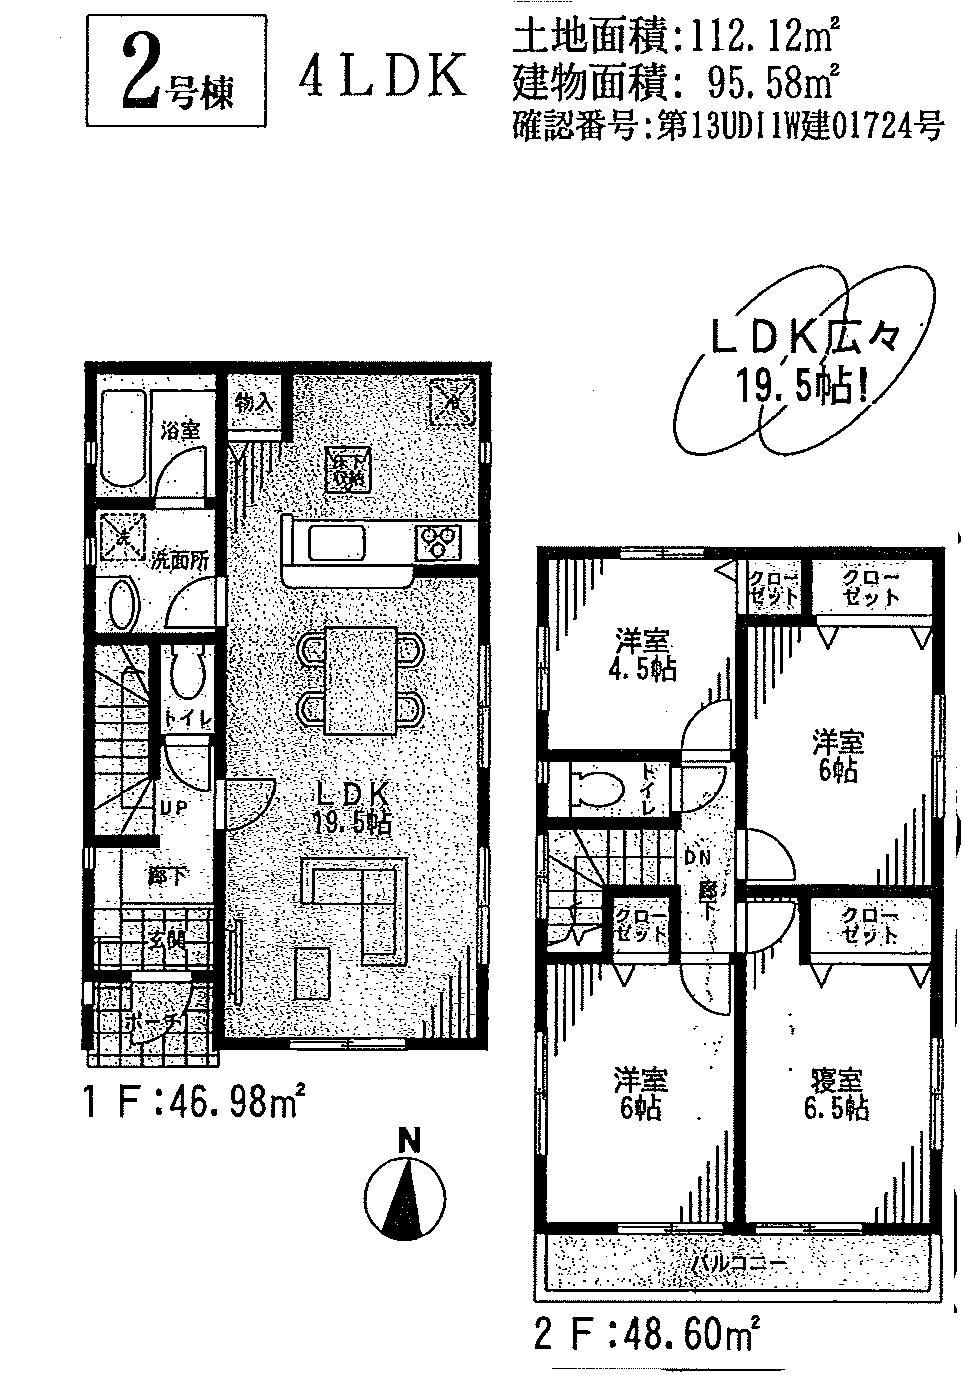 Floor plan. (Building 2), Price 22,800,000 yen, 4LDK, Land area 112.12 sq m , Building area 95.58 sq m